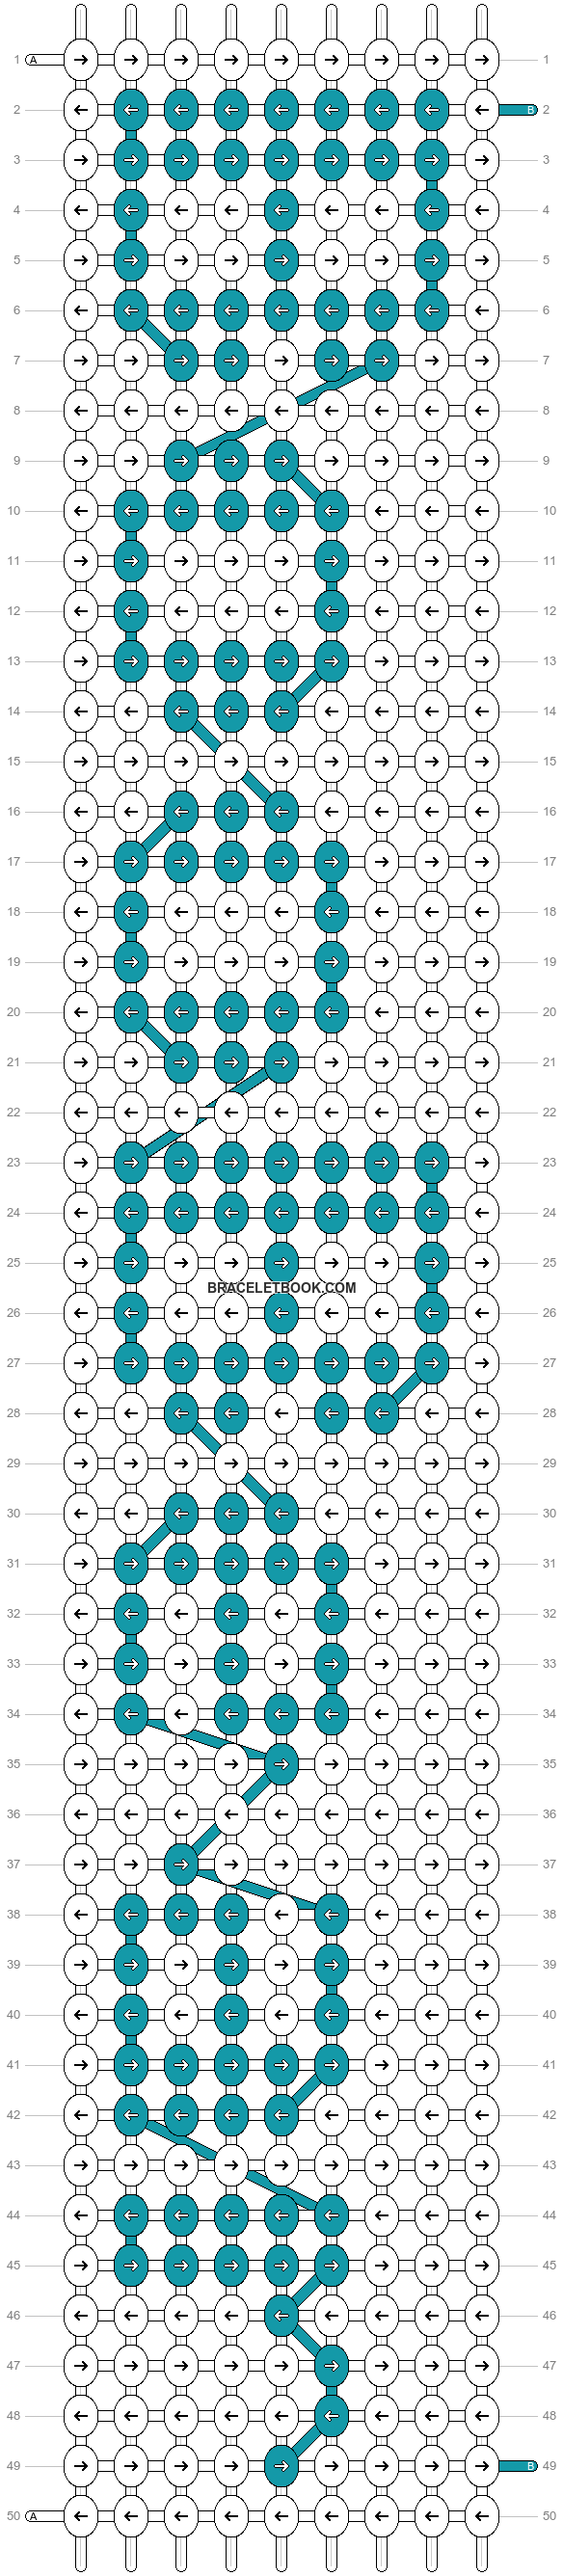 Alpha pattern #6101 pattern